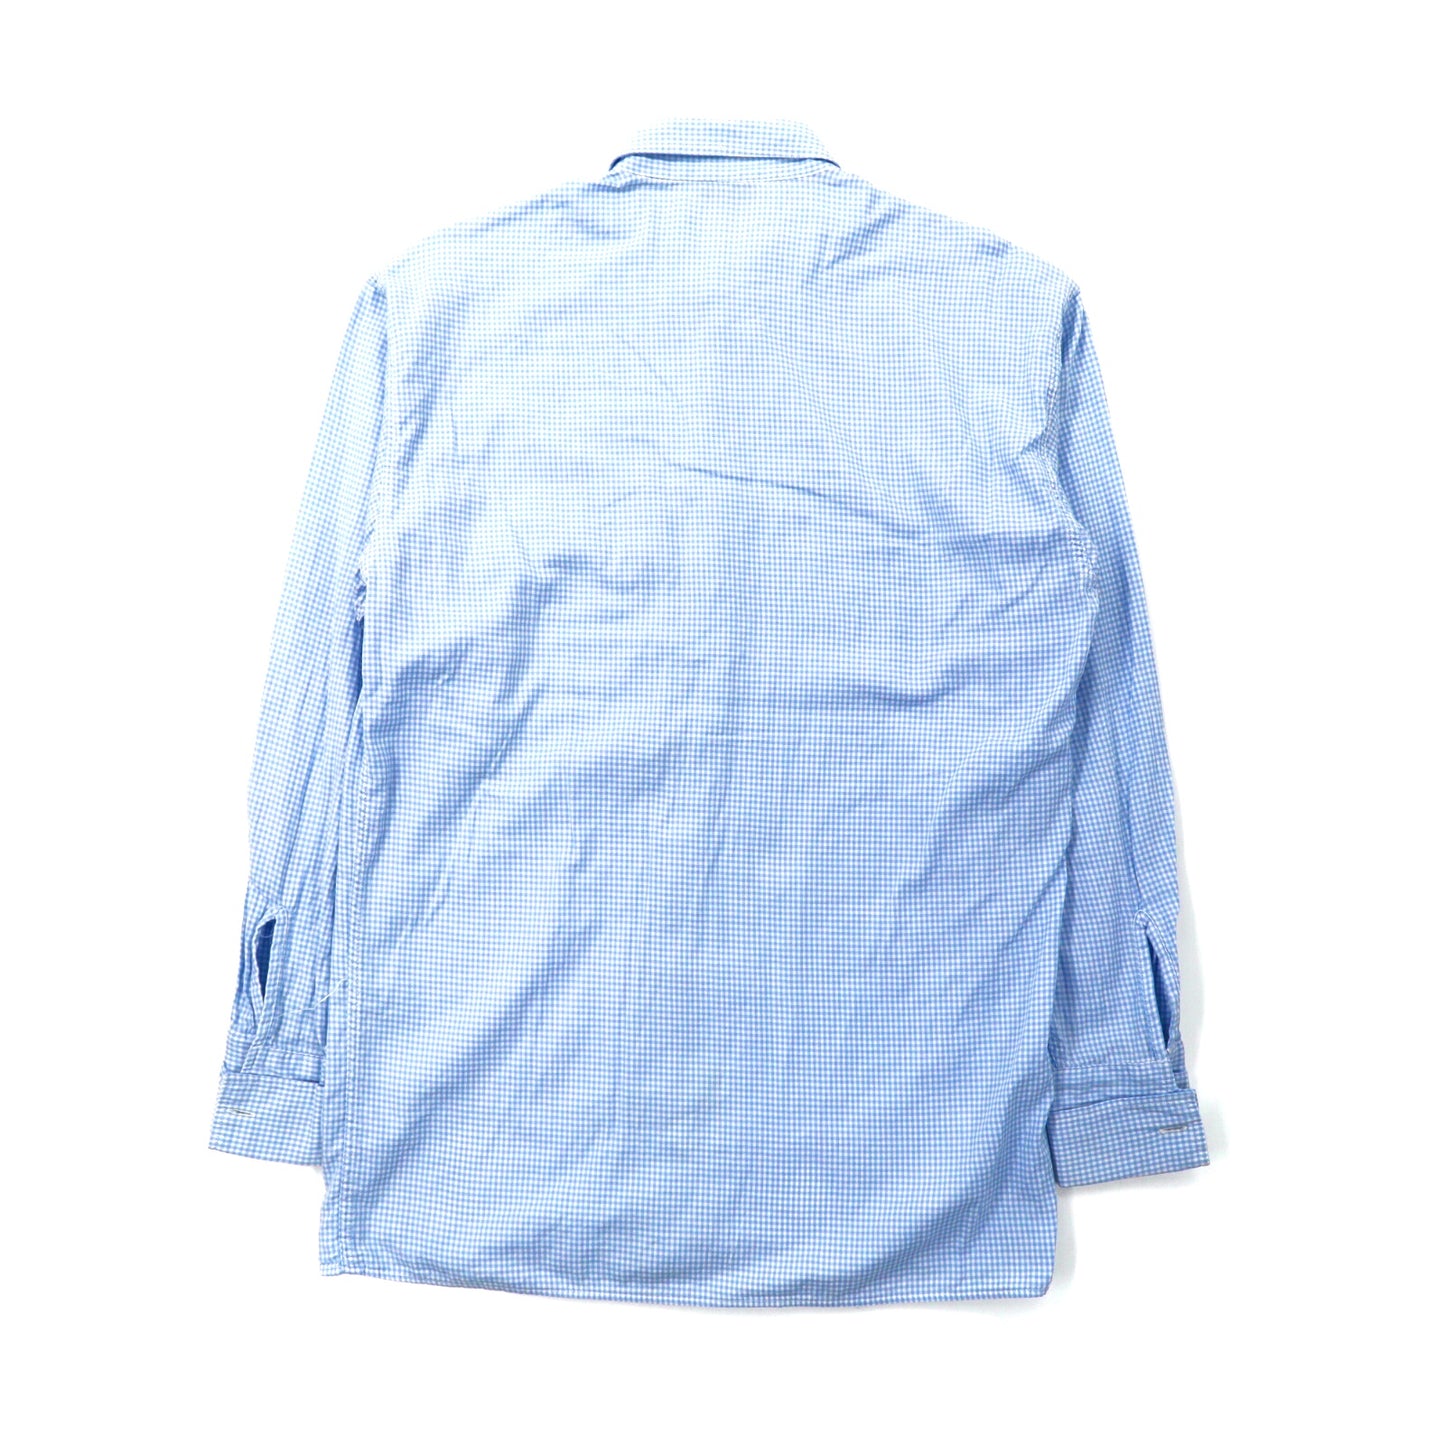 VERSUS ( GIANNI VERSACE ) ギンガムチェックシャツ 46 ブルー ライオンボタン イタリア製